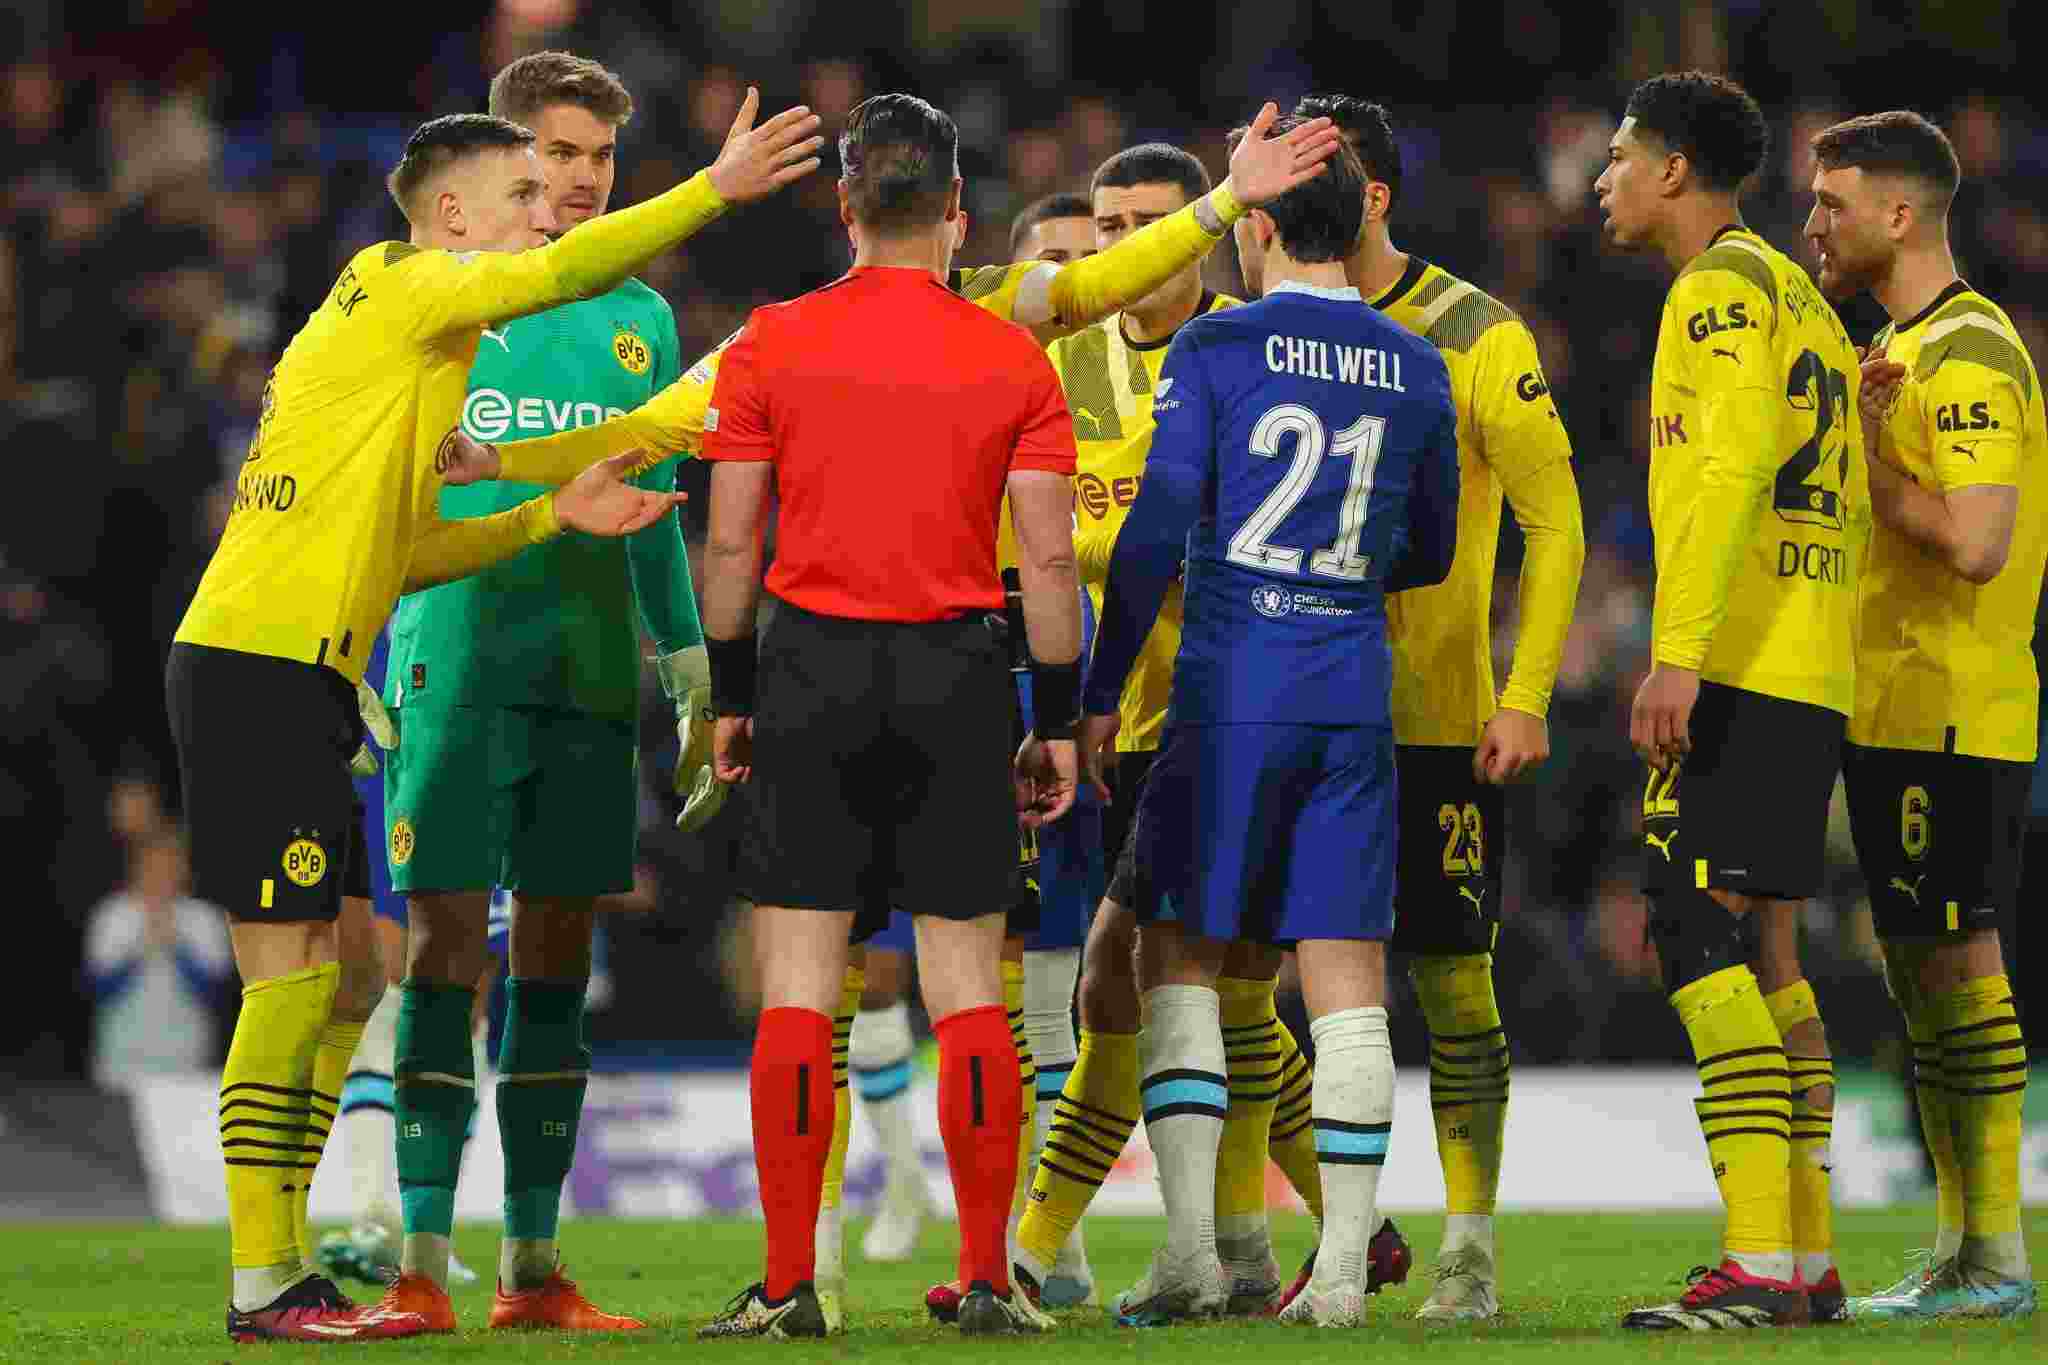 REVEALED: Why Chelsea’s penalty against Dortmund was retaken